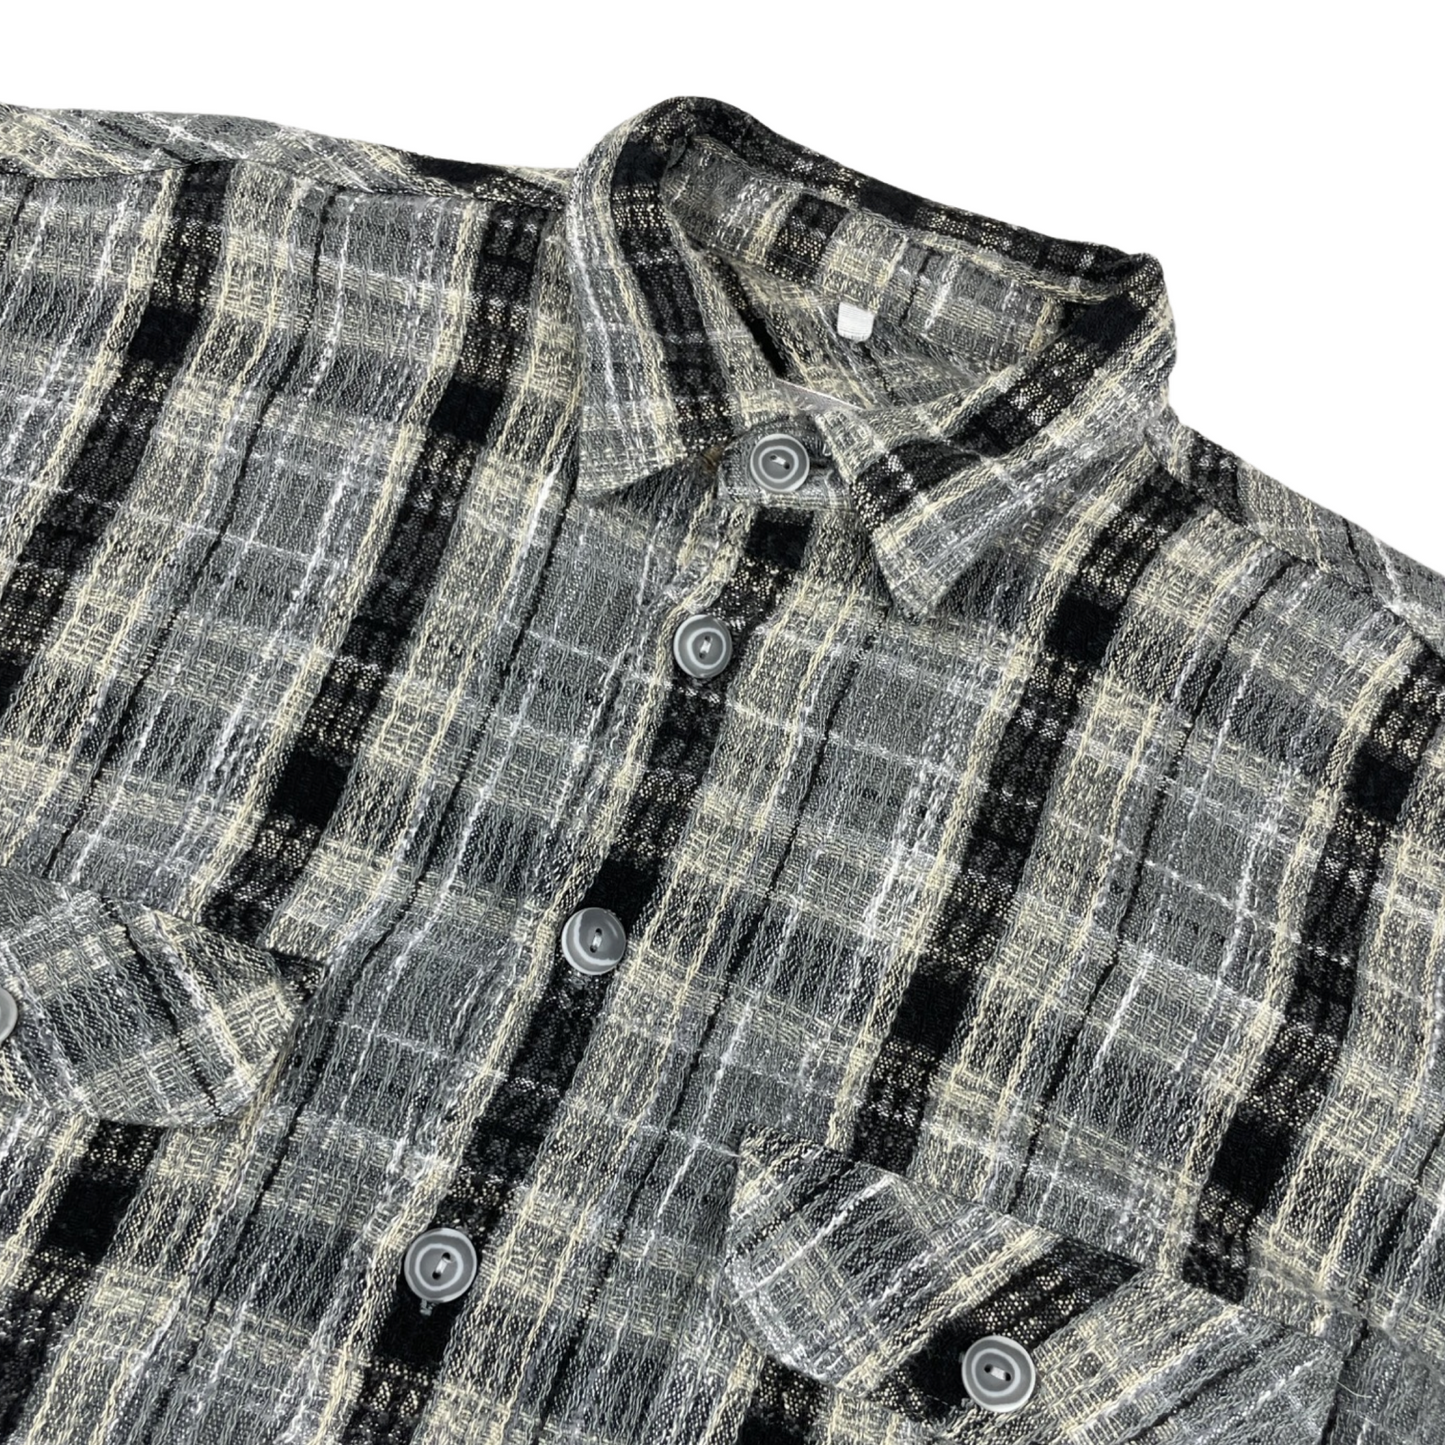 Vintage Grey and Black Plaid Textured Flannel Shirt L